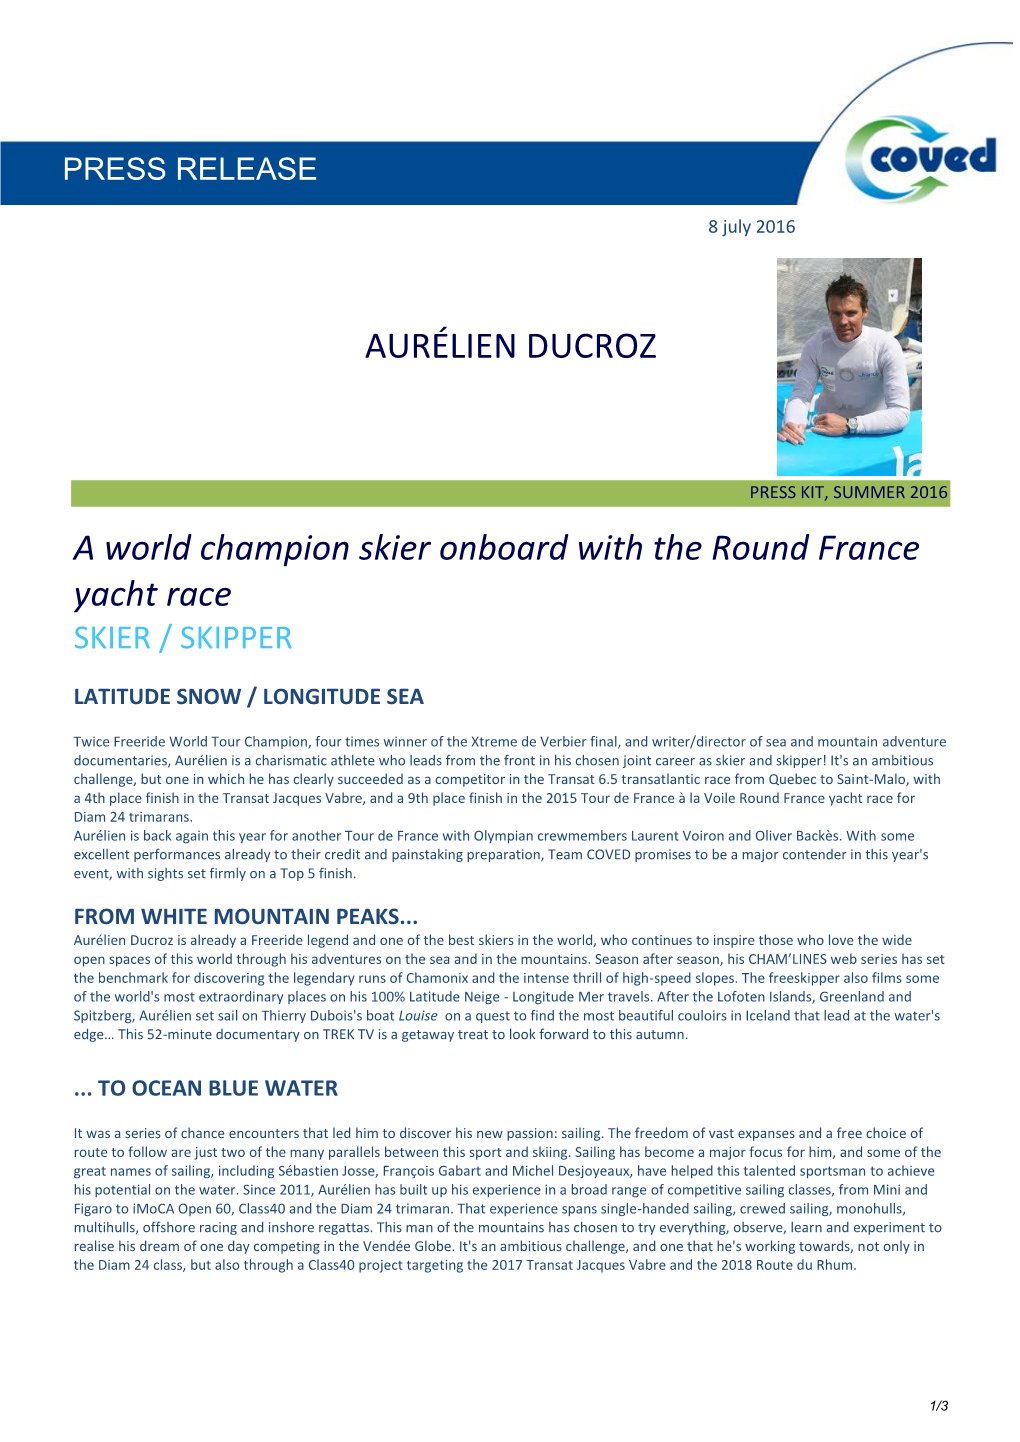 AURÉLIEN DUCROZ a World Champion Skier Onboard With